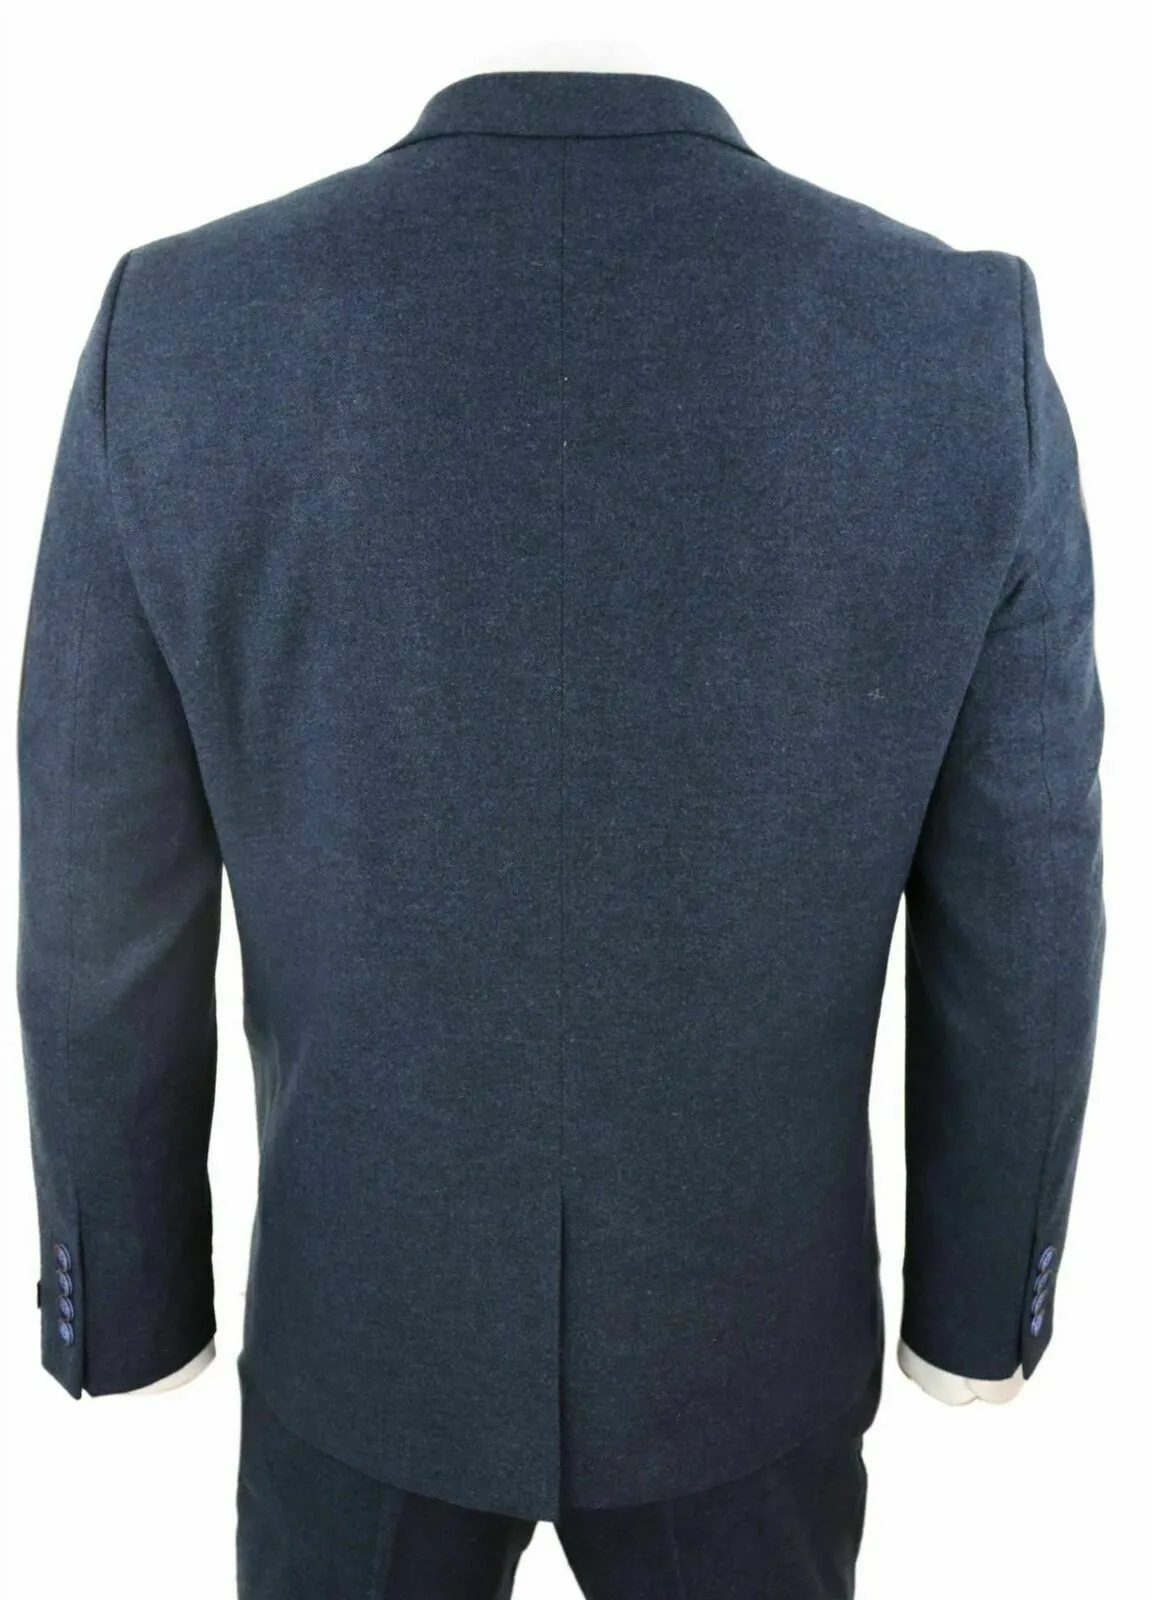 Mens Wool Tweed Peaky Blinders Suit 3 Piece Authentic 1920s Tailored Fit Classic Prom Suit Jacket Pants Vest306g